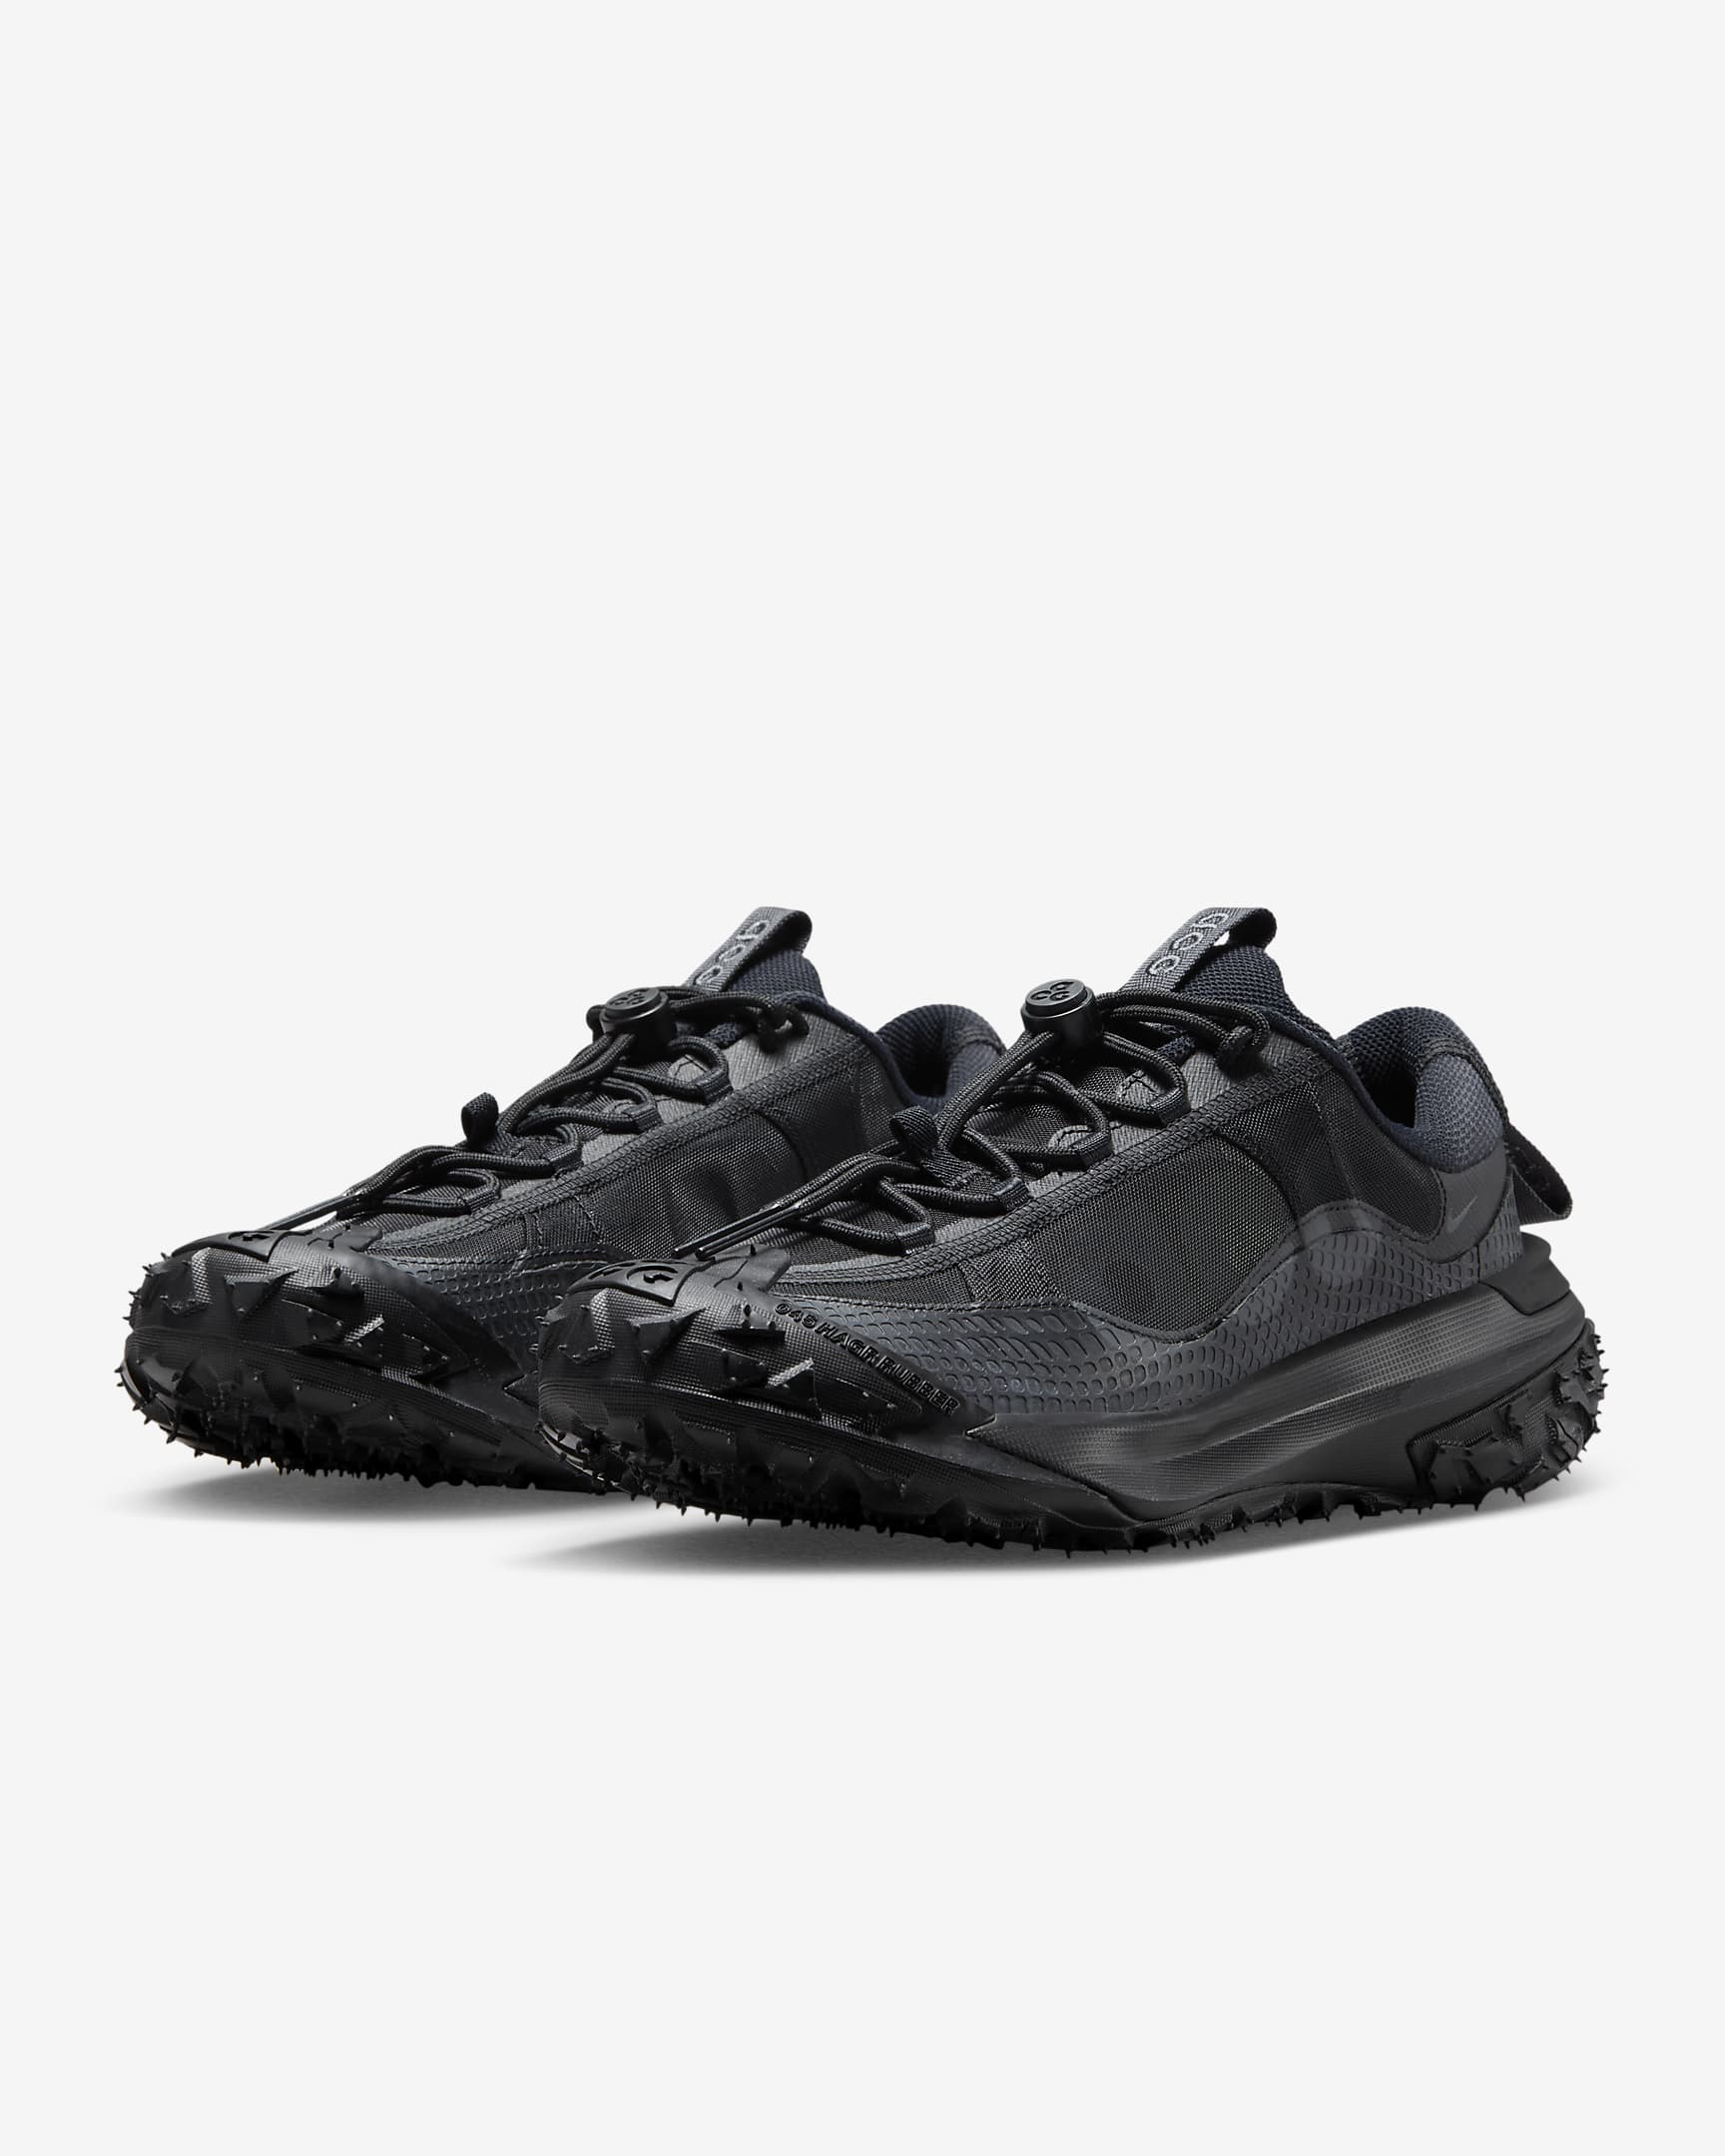 Nike ACG Mountain Fly 2 Low Men's Shoes - Black/Black/Black/Anthracite